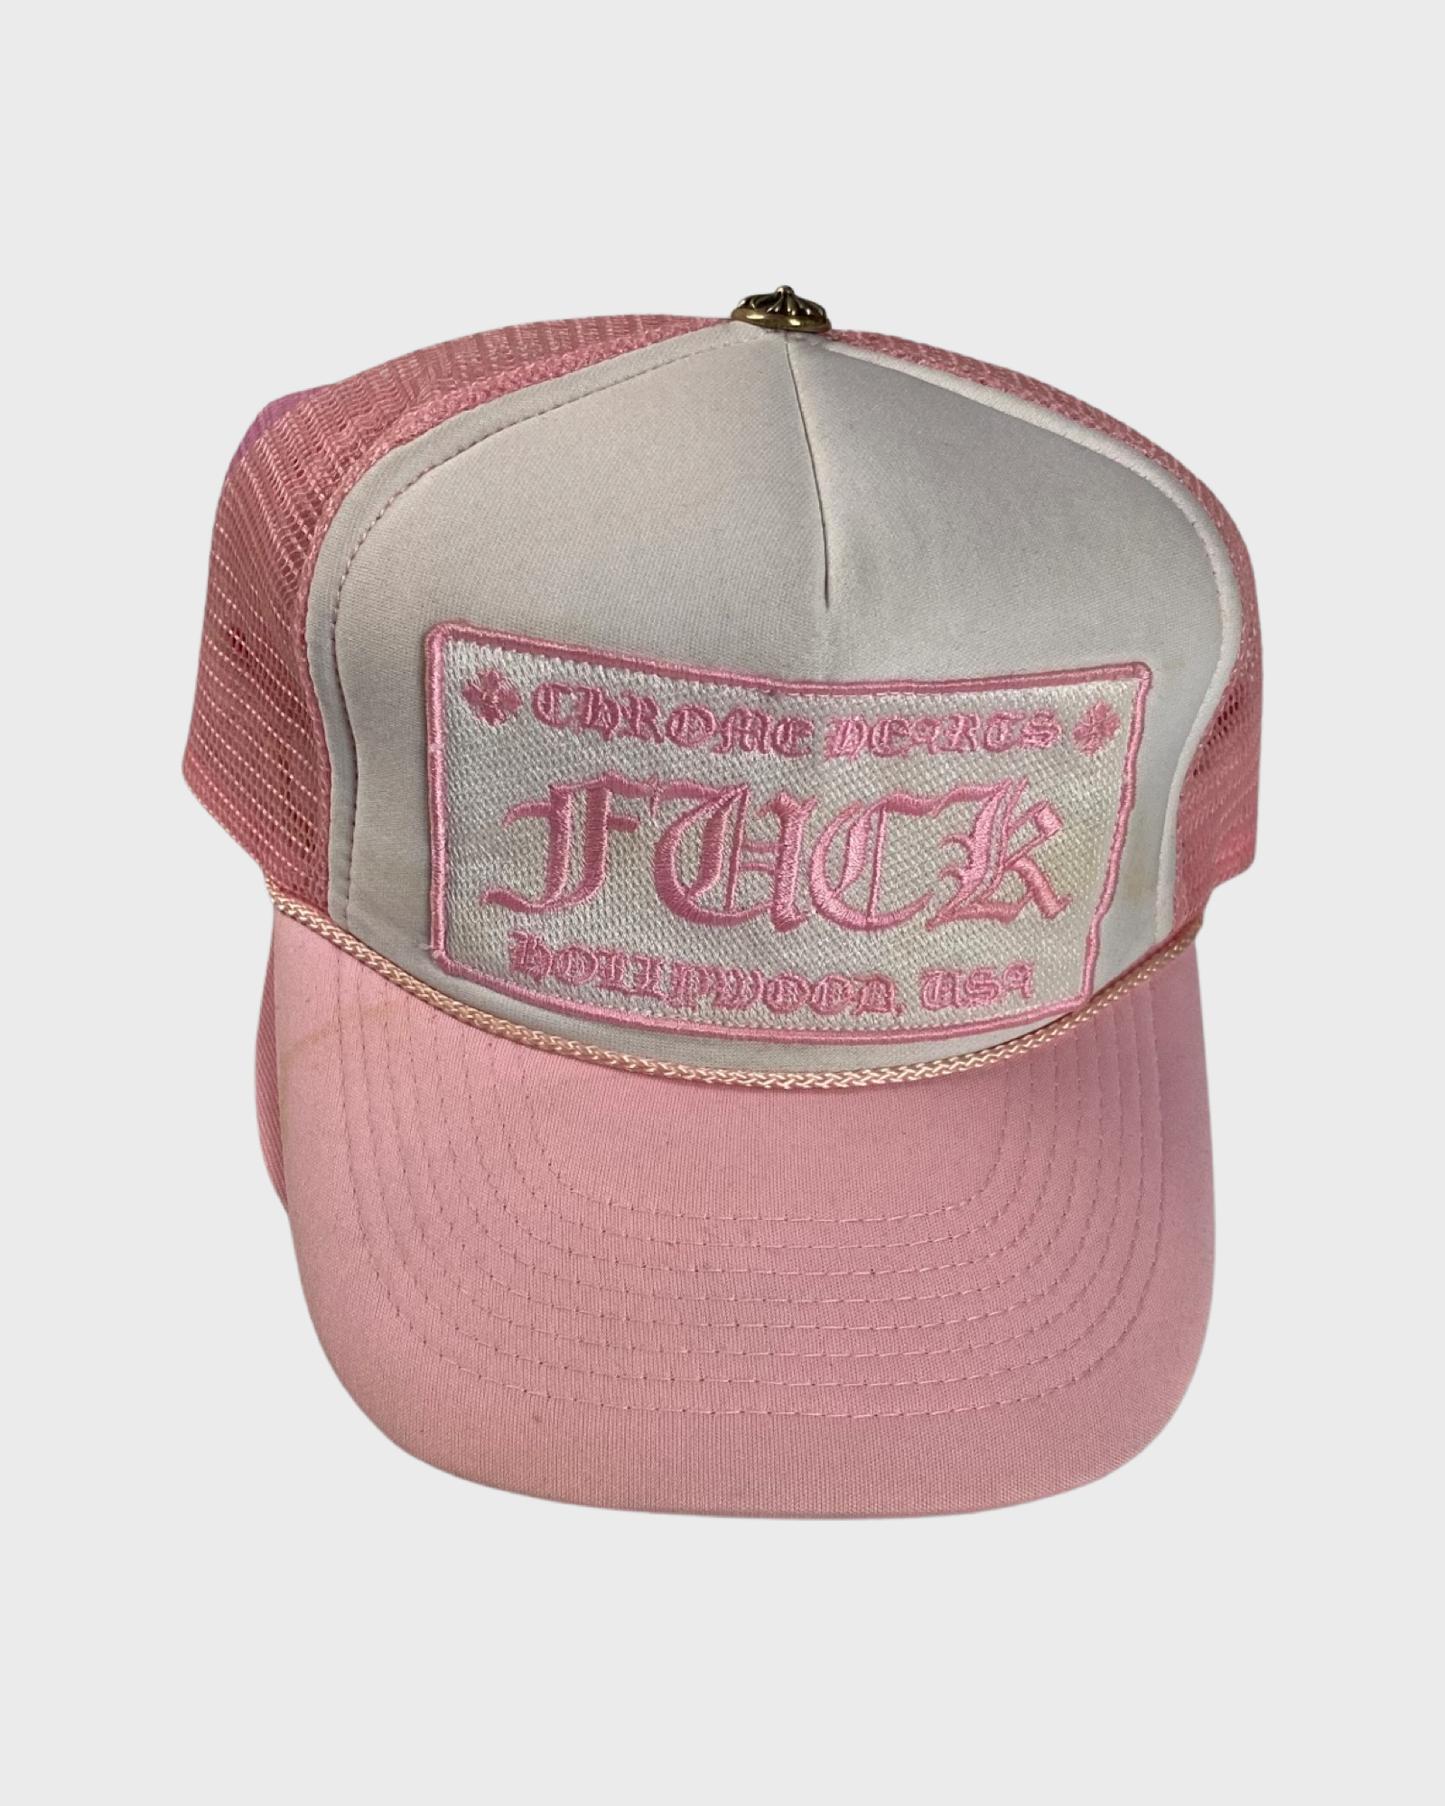 Chrome Hearts Pink FUCK trucker hat / cap SZ:OS